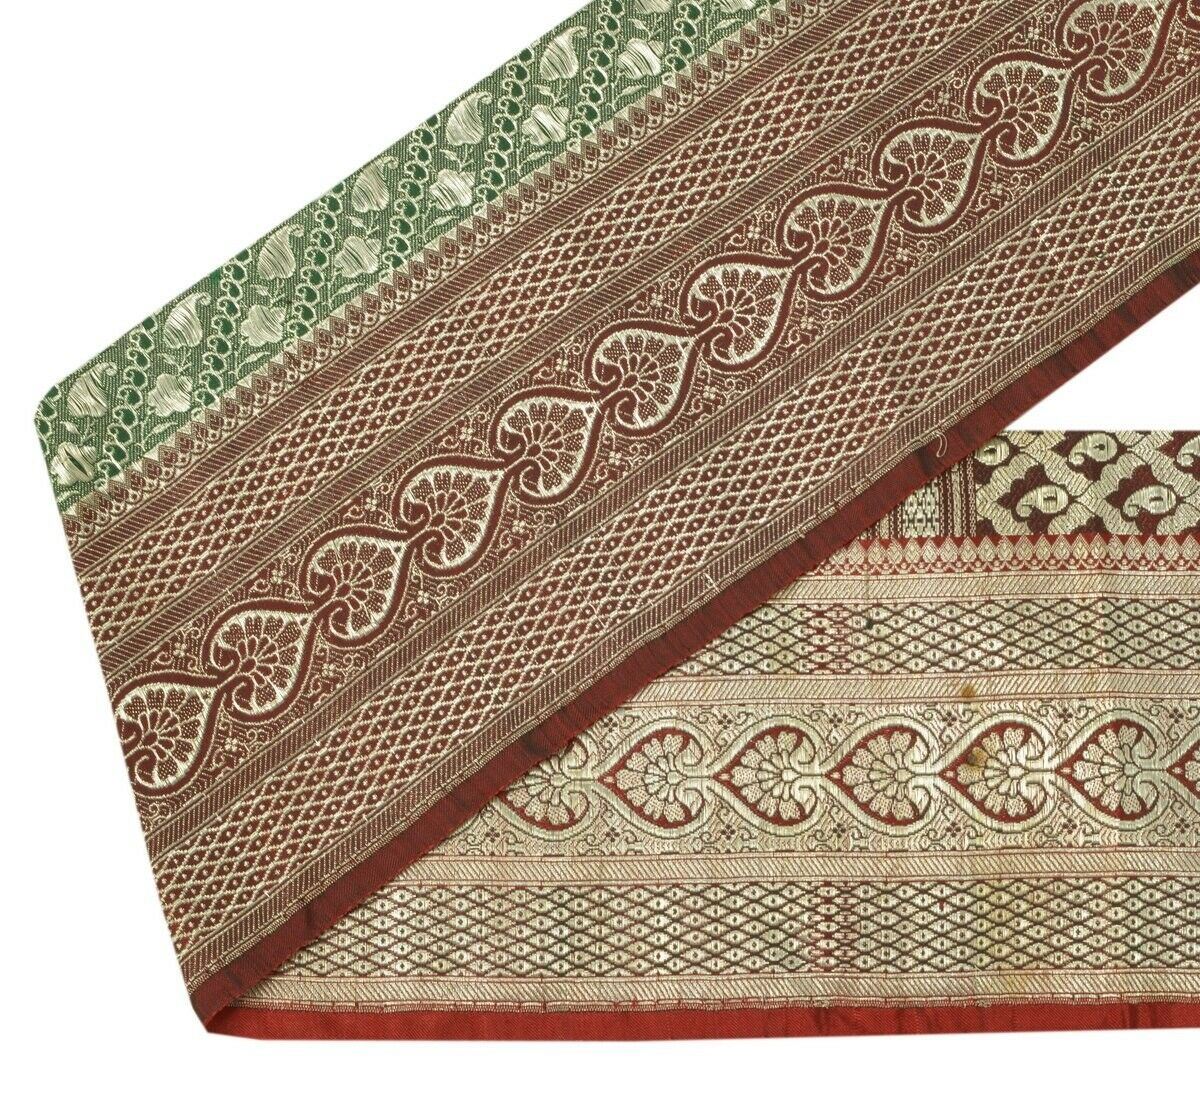 Vintage Sari Border Indian Craft Sewing Trim Woven Banarasi Brocade Ribbon Lace